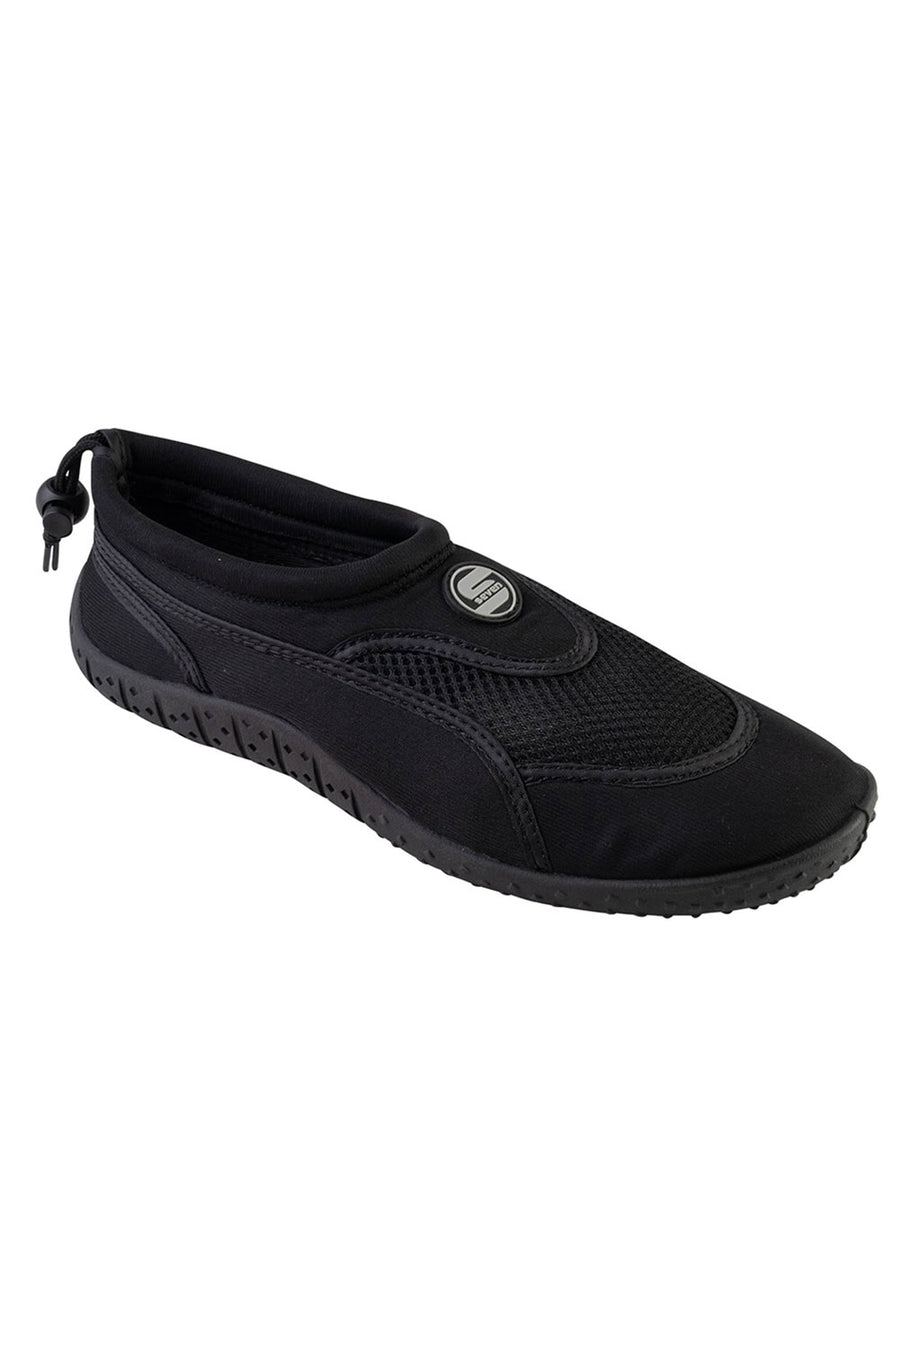 Junior Aqua Sock Wave Water Shoes Waterproof Slip-Ons for Pool, Beach and Sports